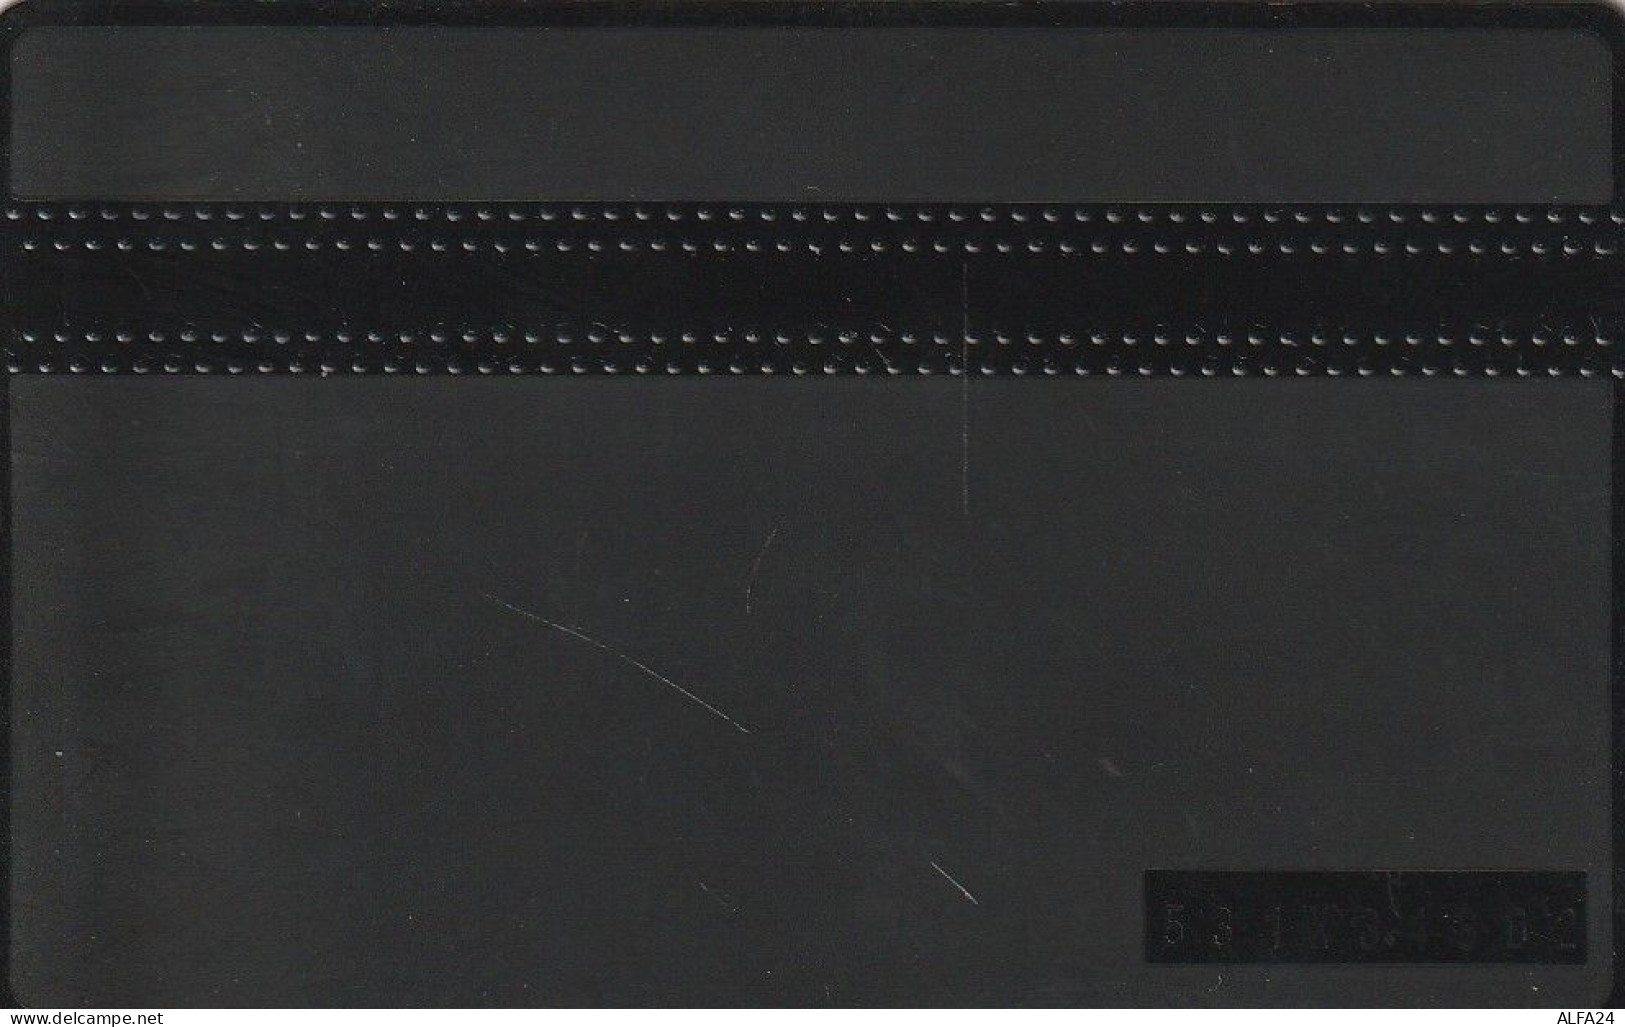 PHONE CARD BELGIO LG (CV6653 - Zonder Chip